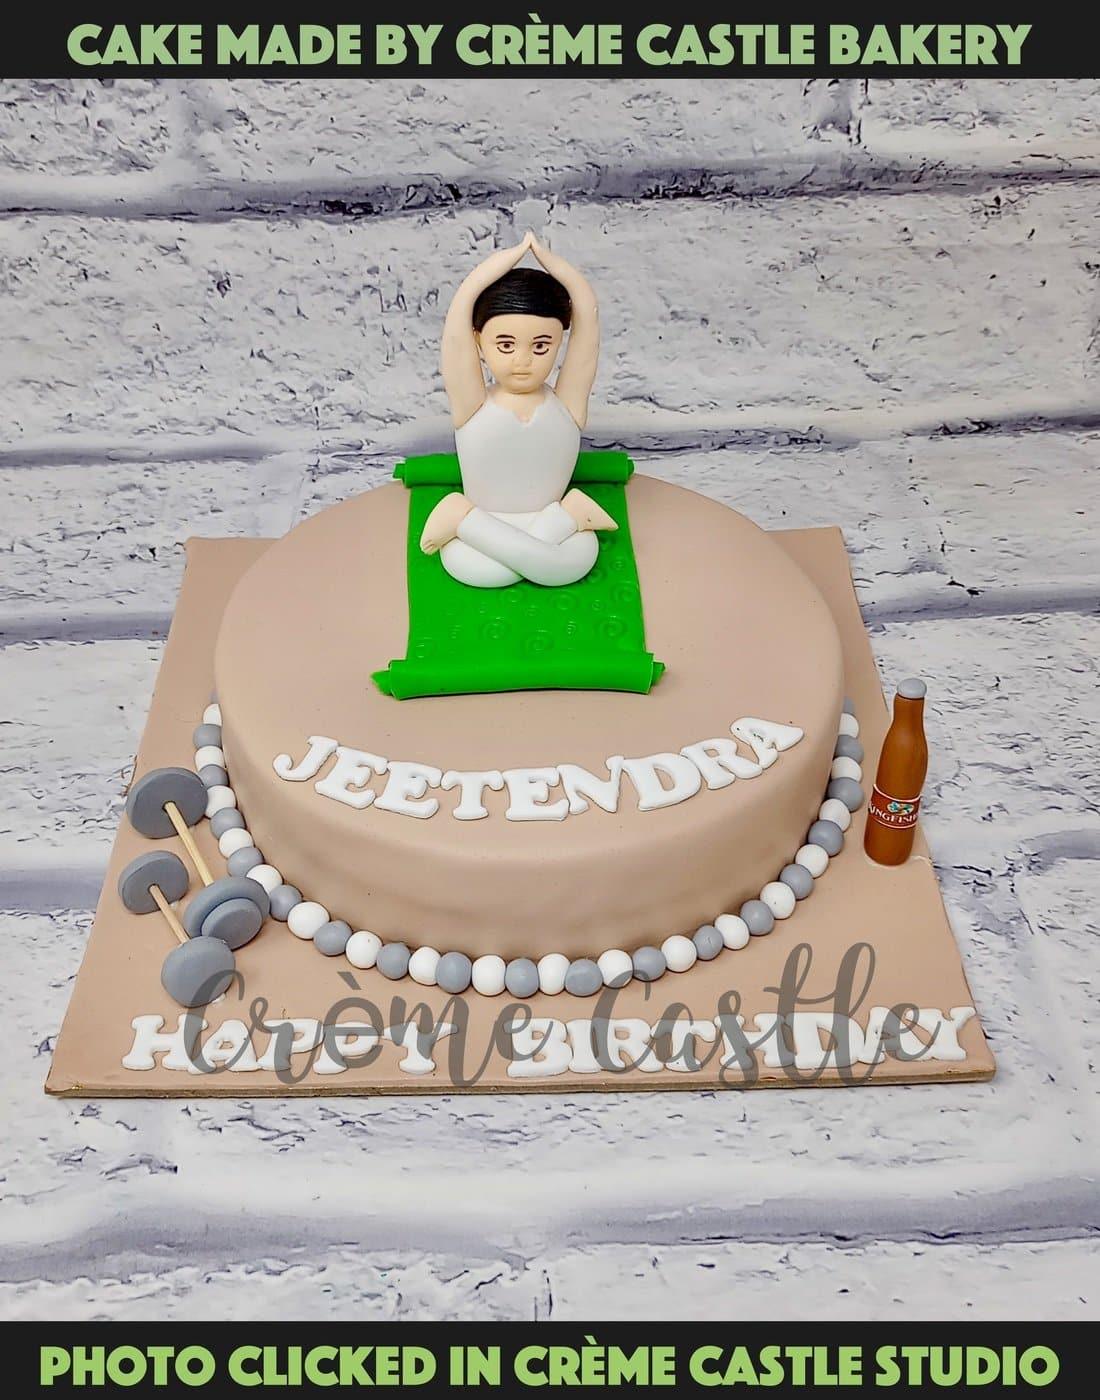 Amitabh Bachchan poses with his Birthday cake on his birthday Photo